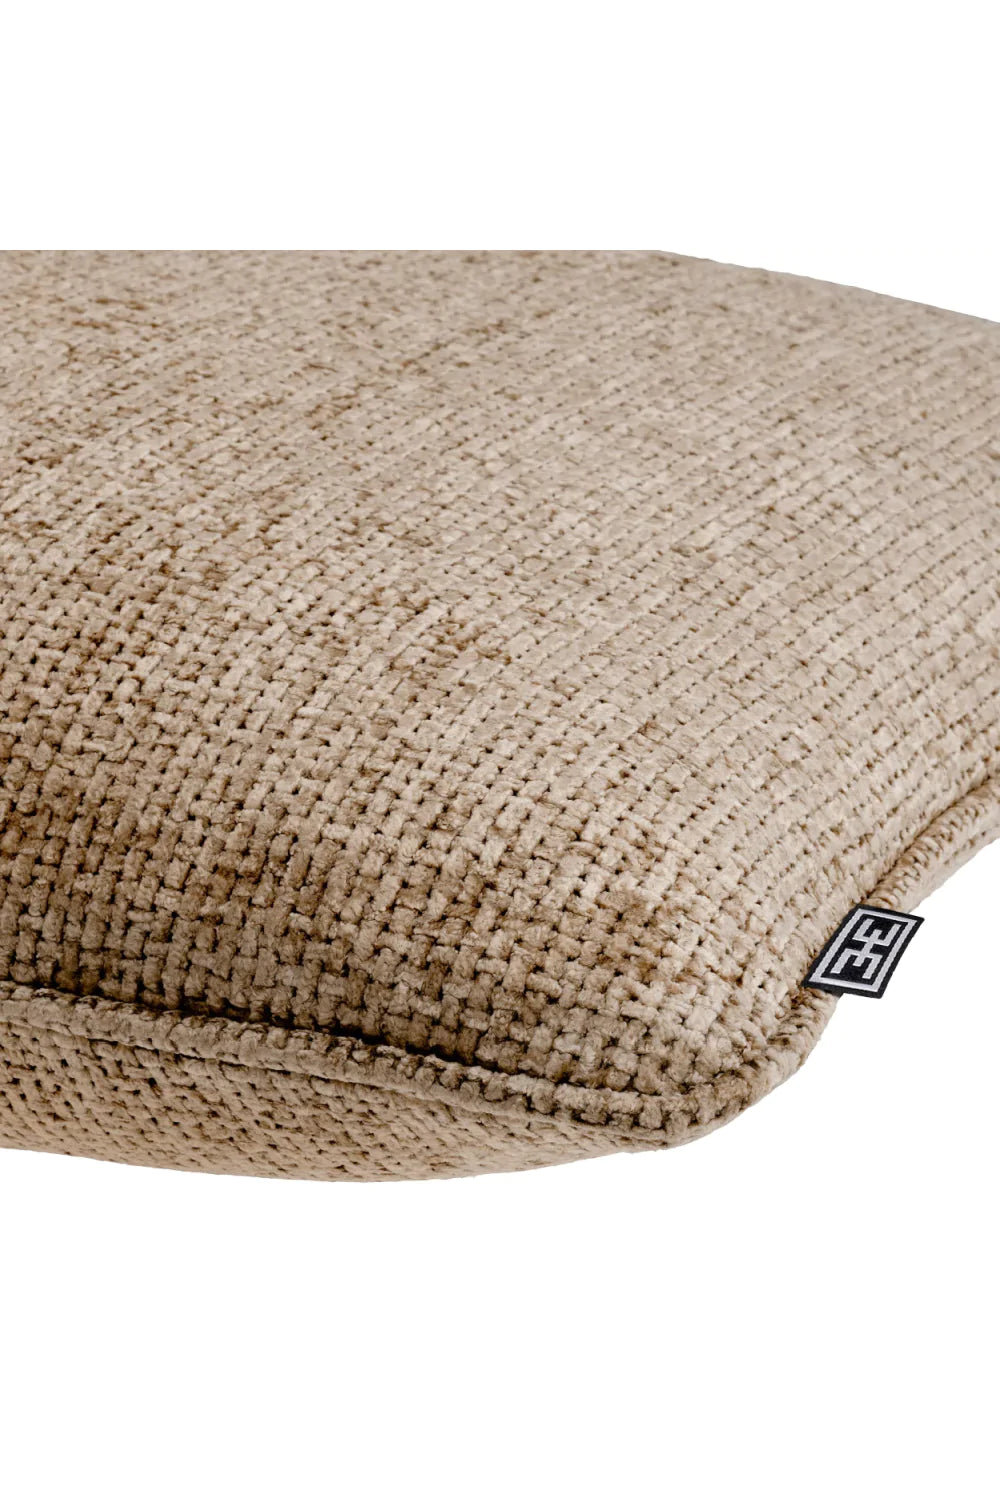 Sand Minimalist Cushion | Eichholtz Lysa | Oroa.com